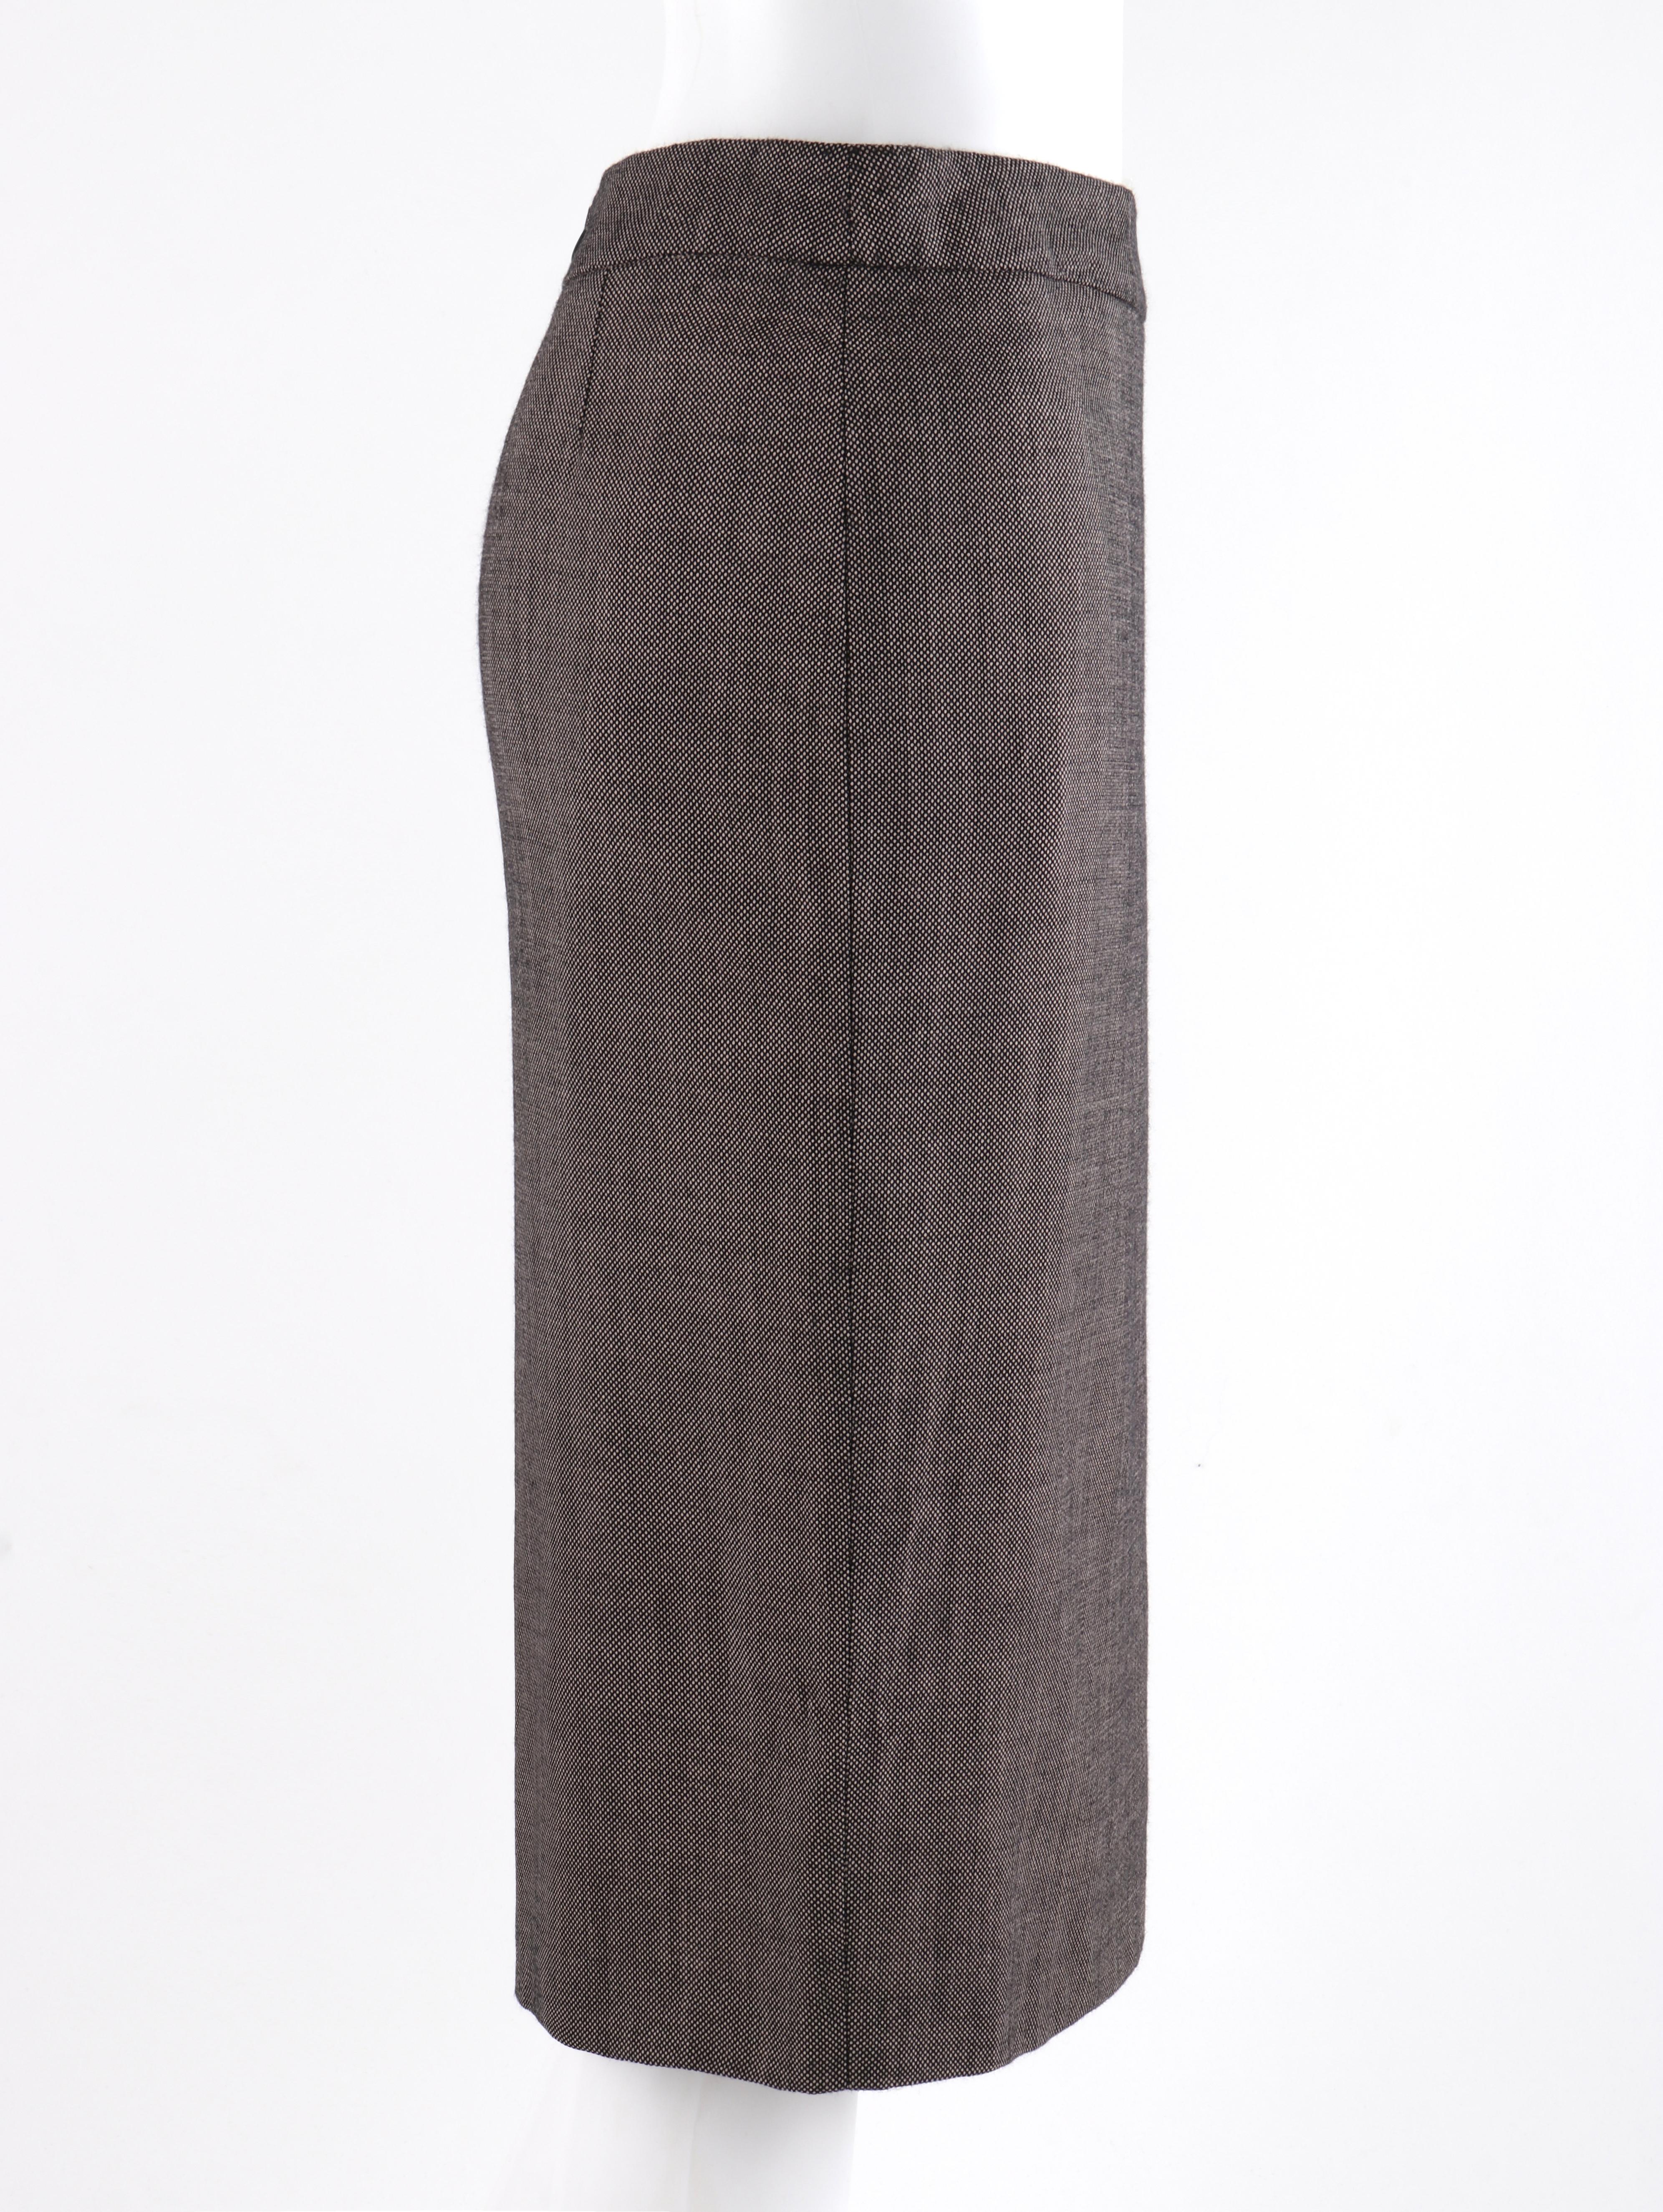  ALEXANDER McQUEEN A/W 1998 “Joan” 2 pc. Removable Collar Blazer Skirt Suit Set For Sale 2